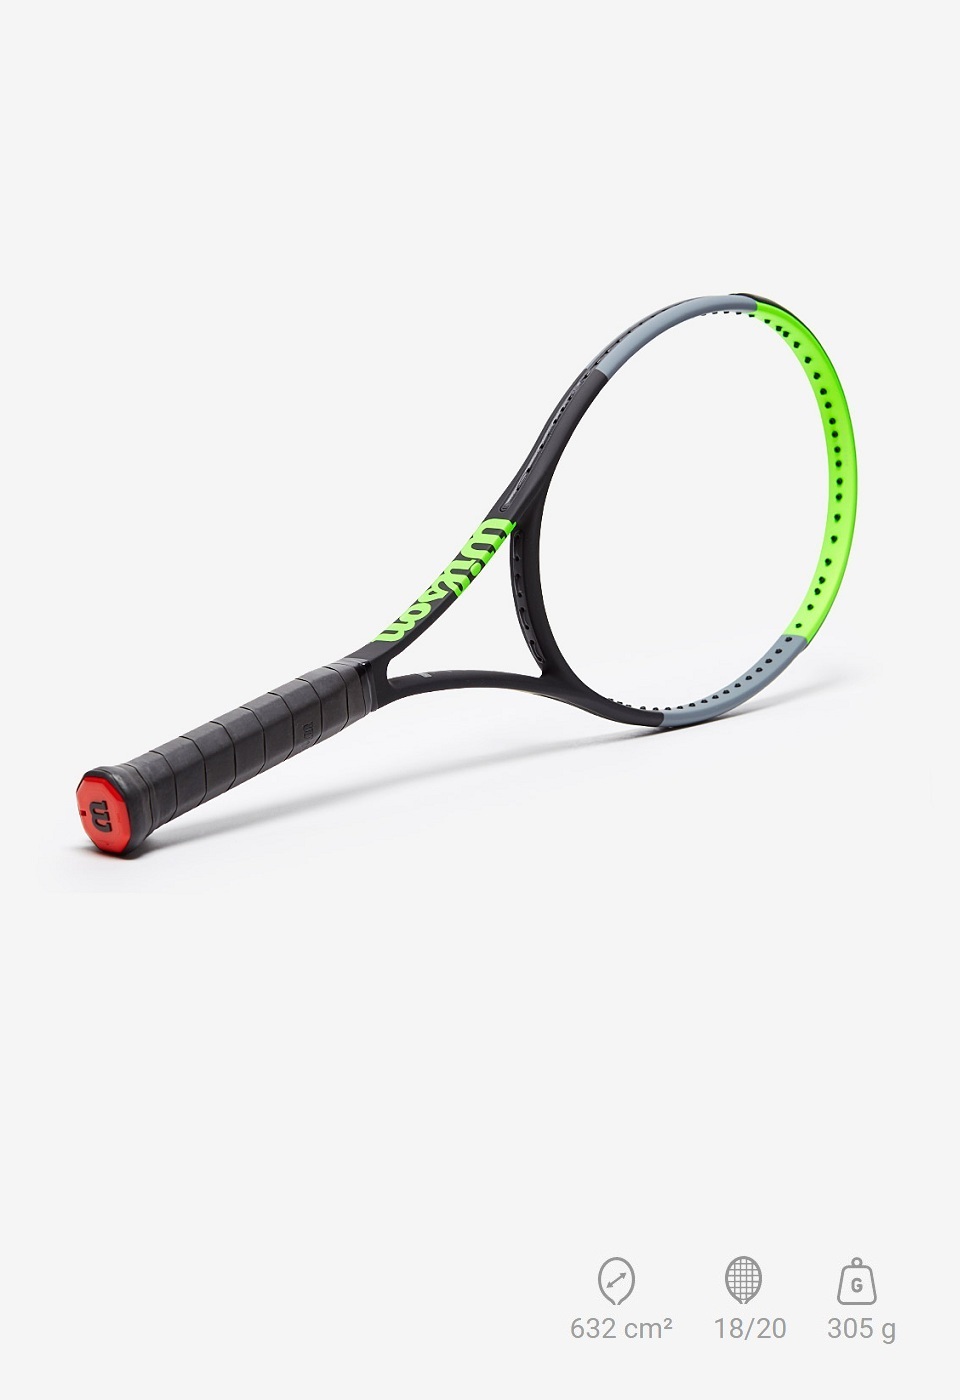 WİLSON - Wilson Blade 98 18x20 V7.0 Tenis Raketi